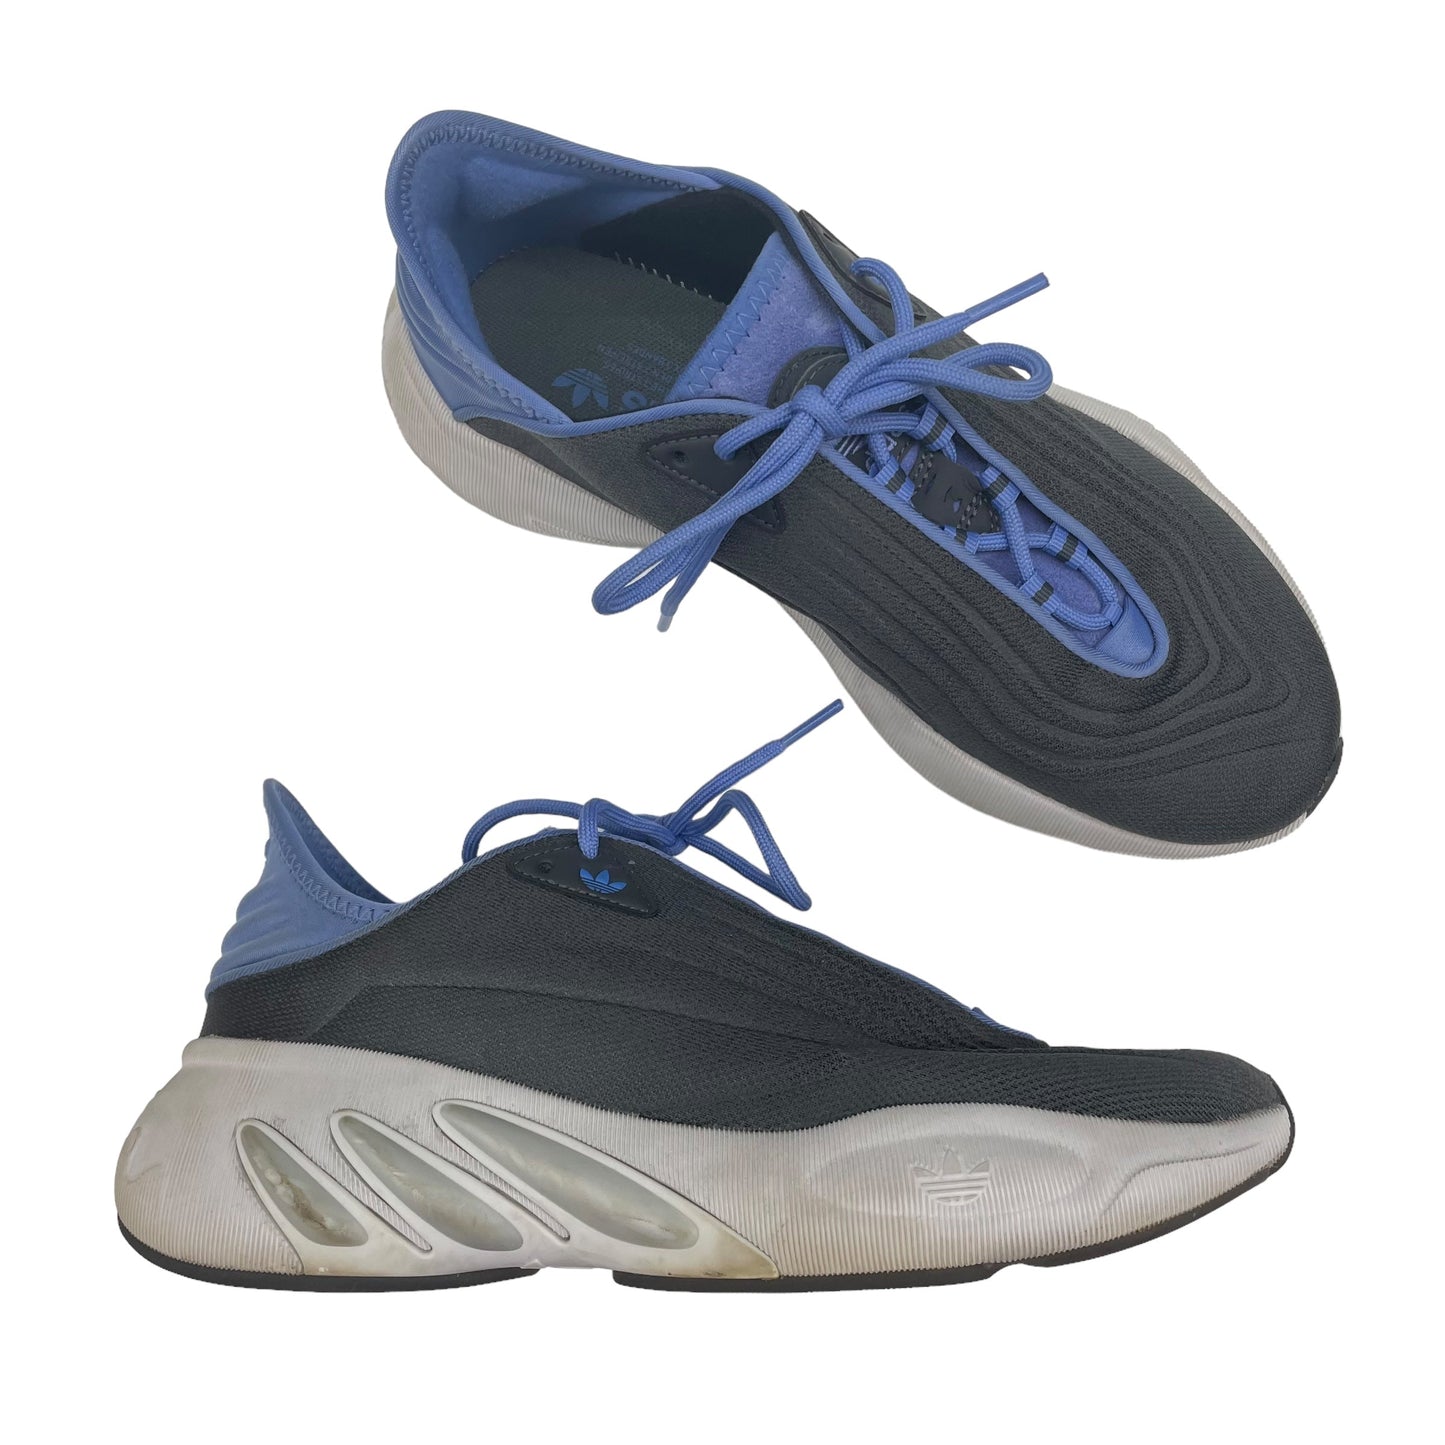 Blue & Grey Shoes Athletic Adidas, Size 9